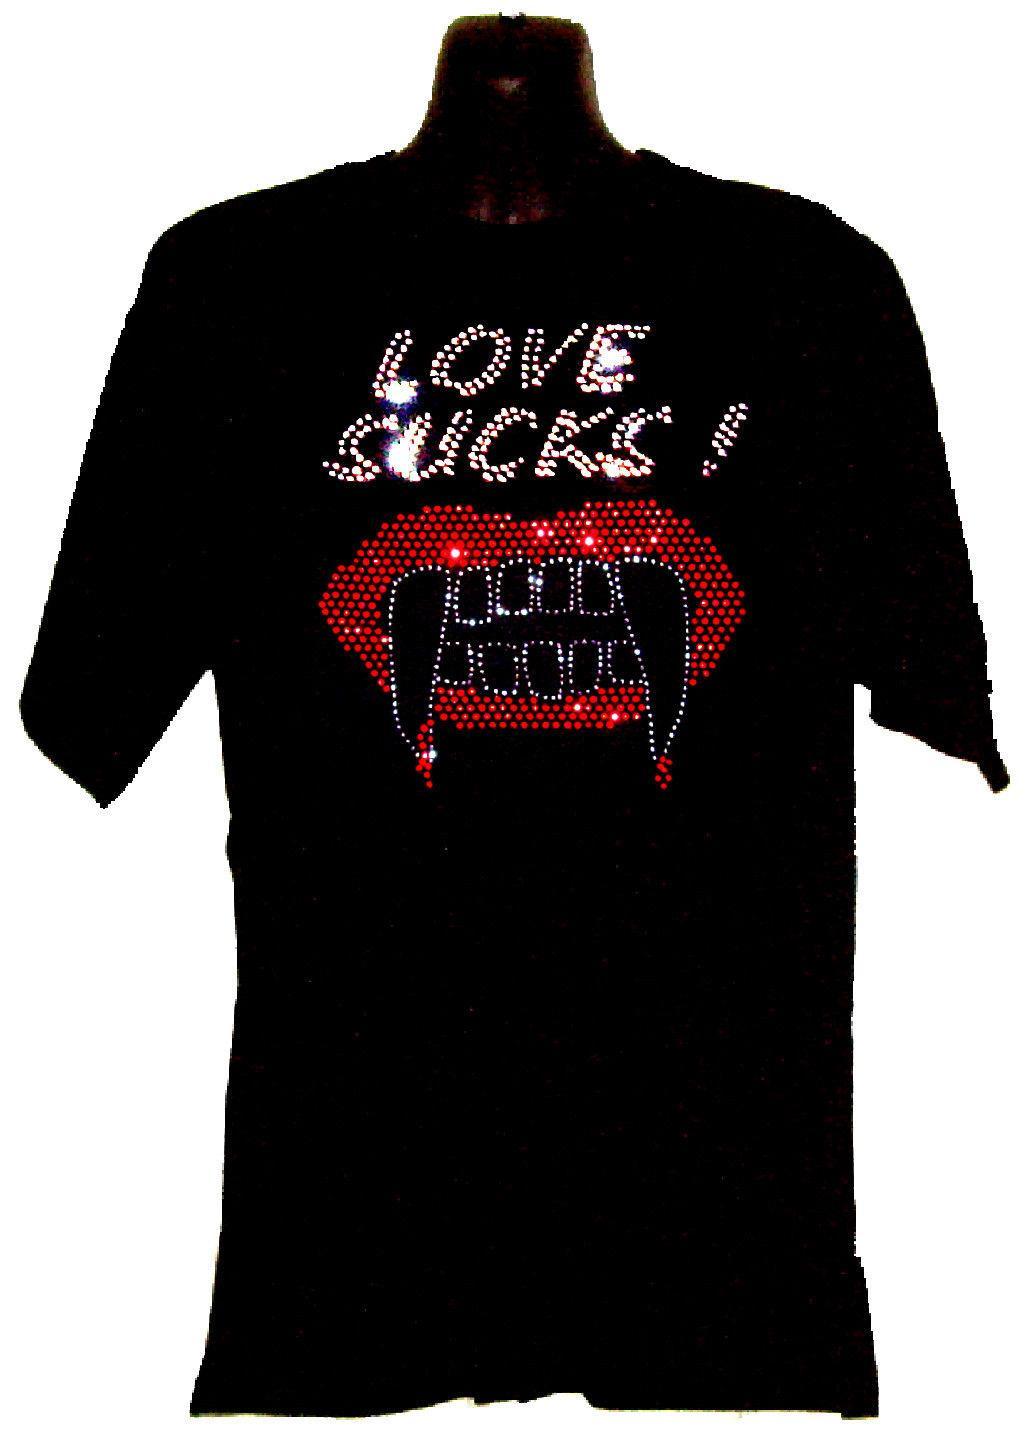 Vampire Love Logo - VAMPIRE LOVE SUCKS GOTHIC HORROR T SHIRT Any Size Small Xxl T Shirt